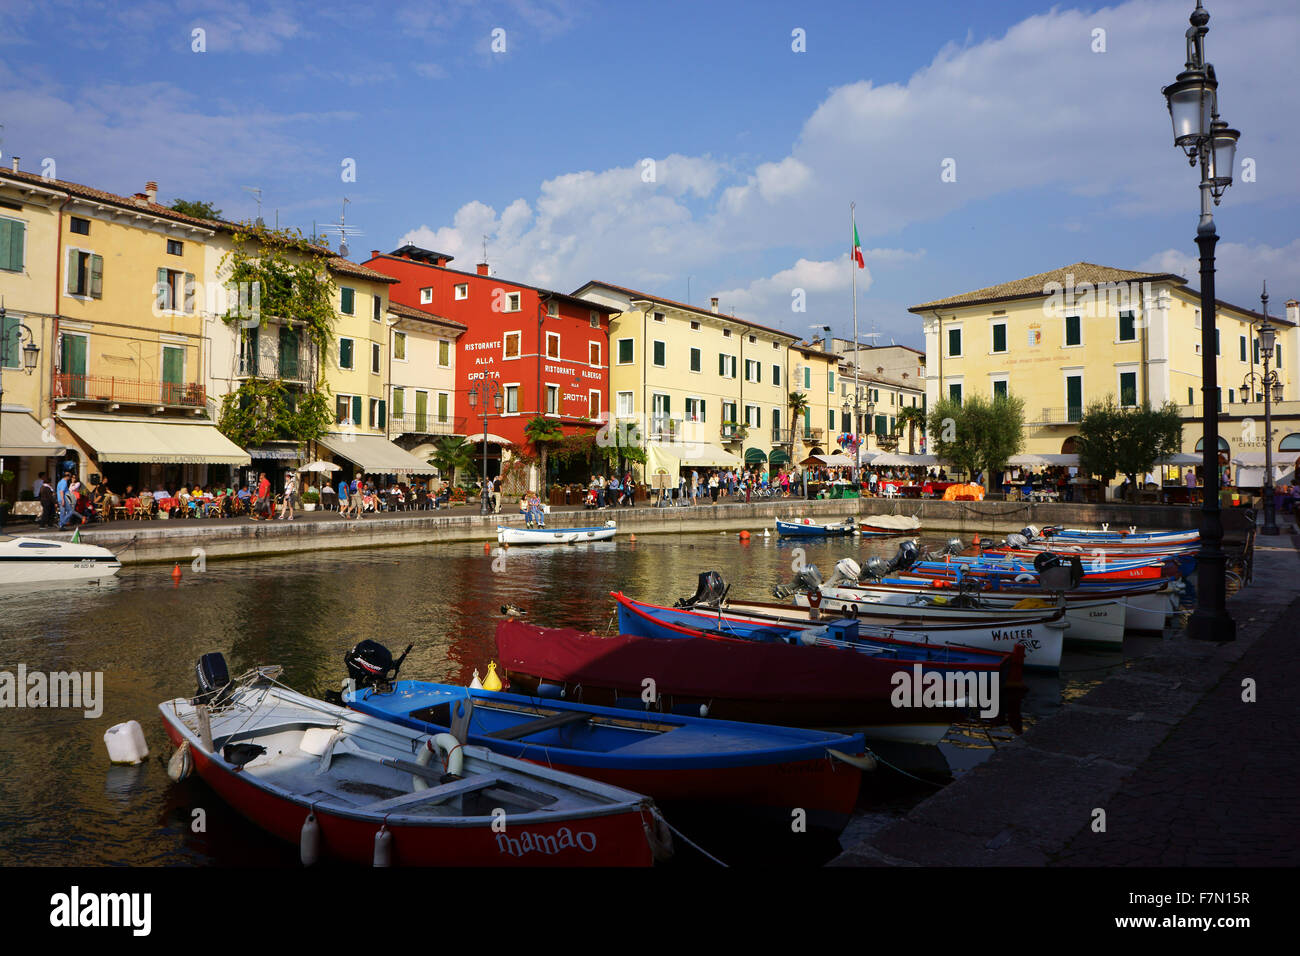 Harbor and historic town of Lazise, Lake Garda, Province Verona, Italy Stock Photo